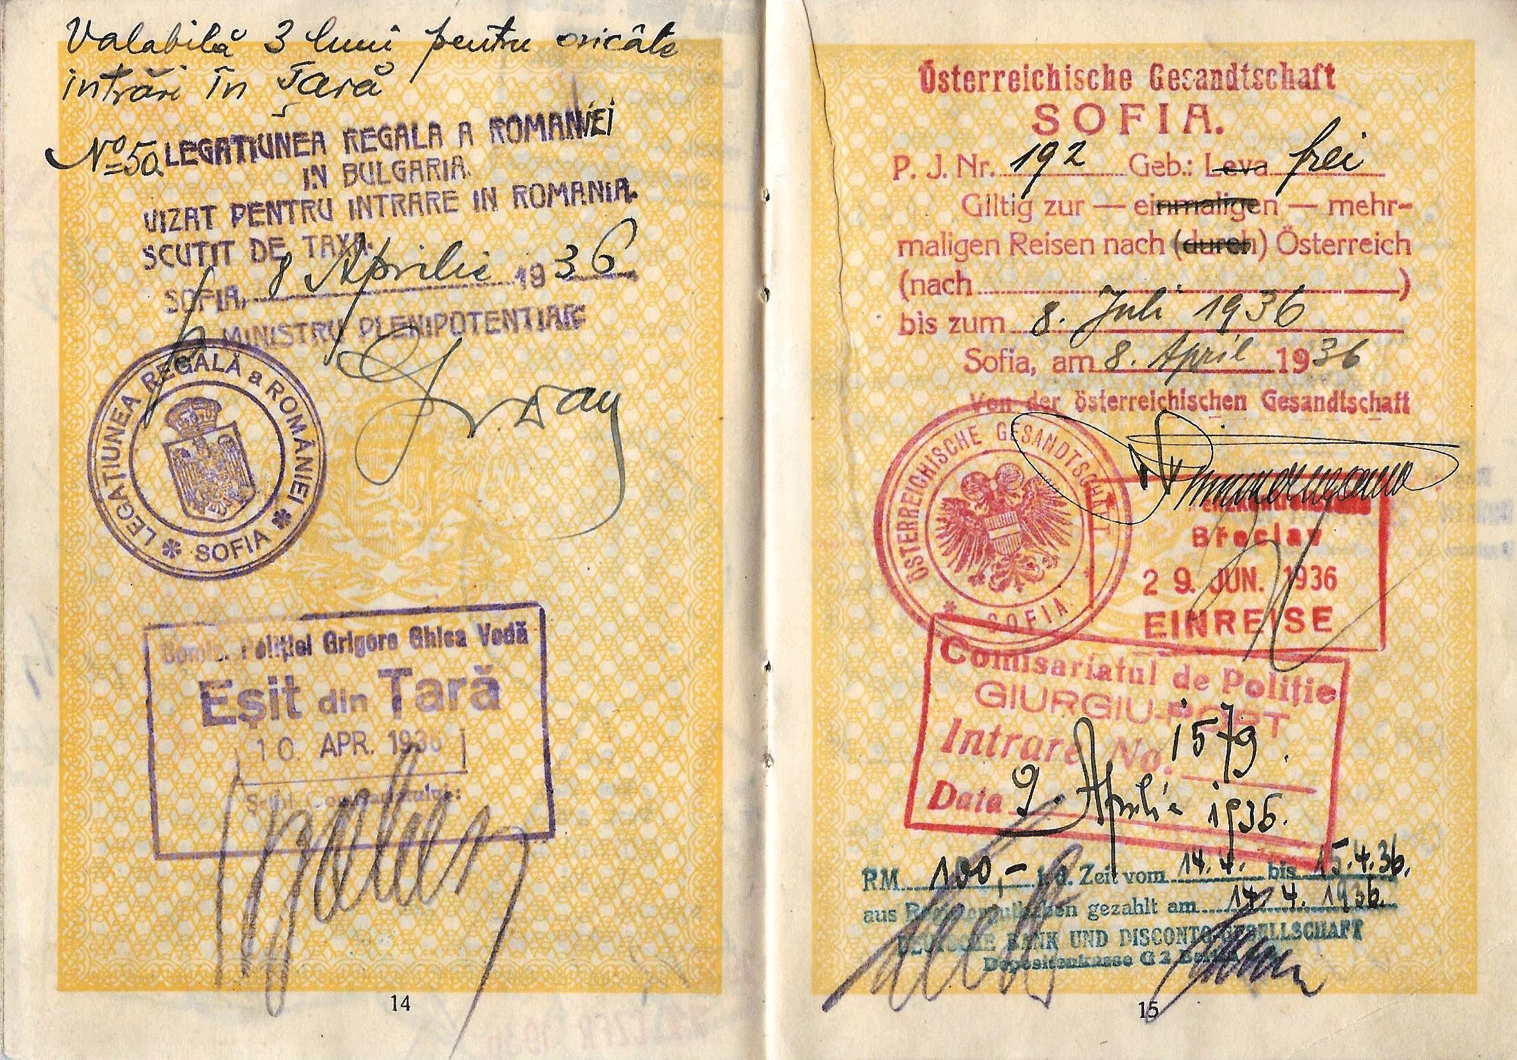 1938 Austrian visa